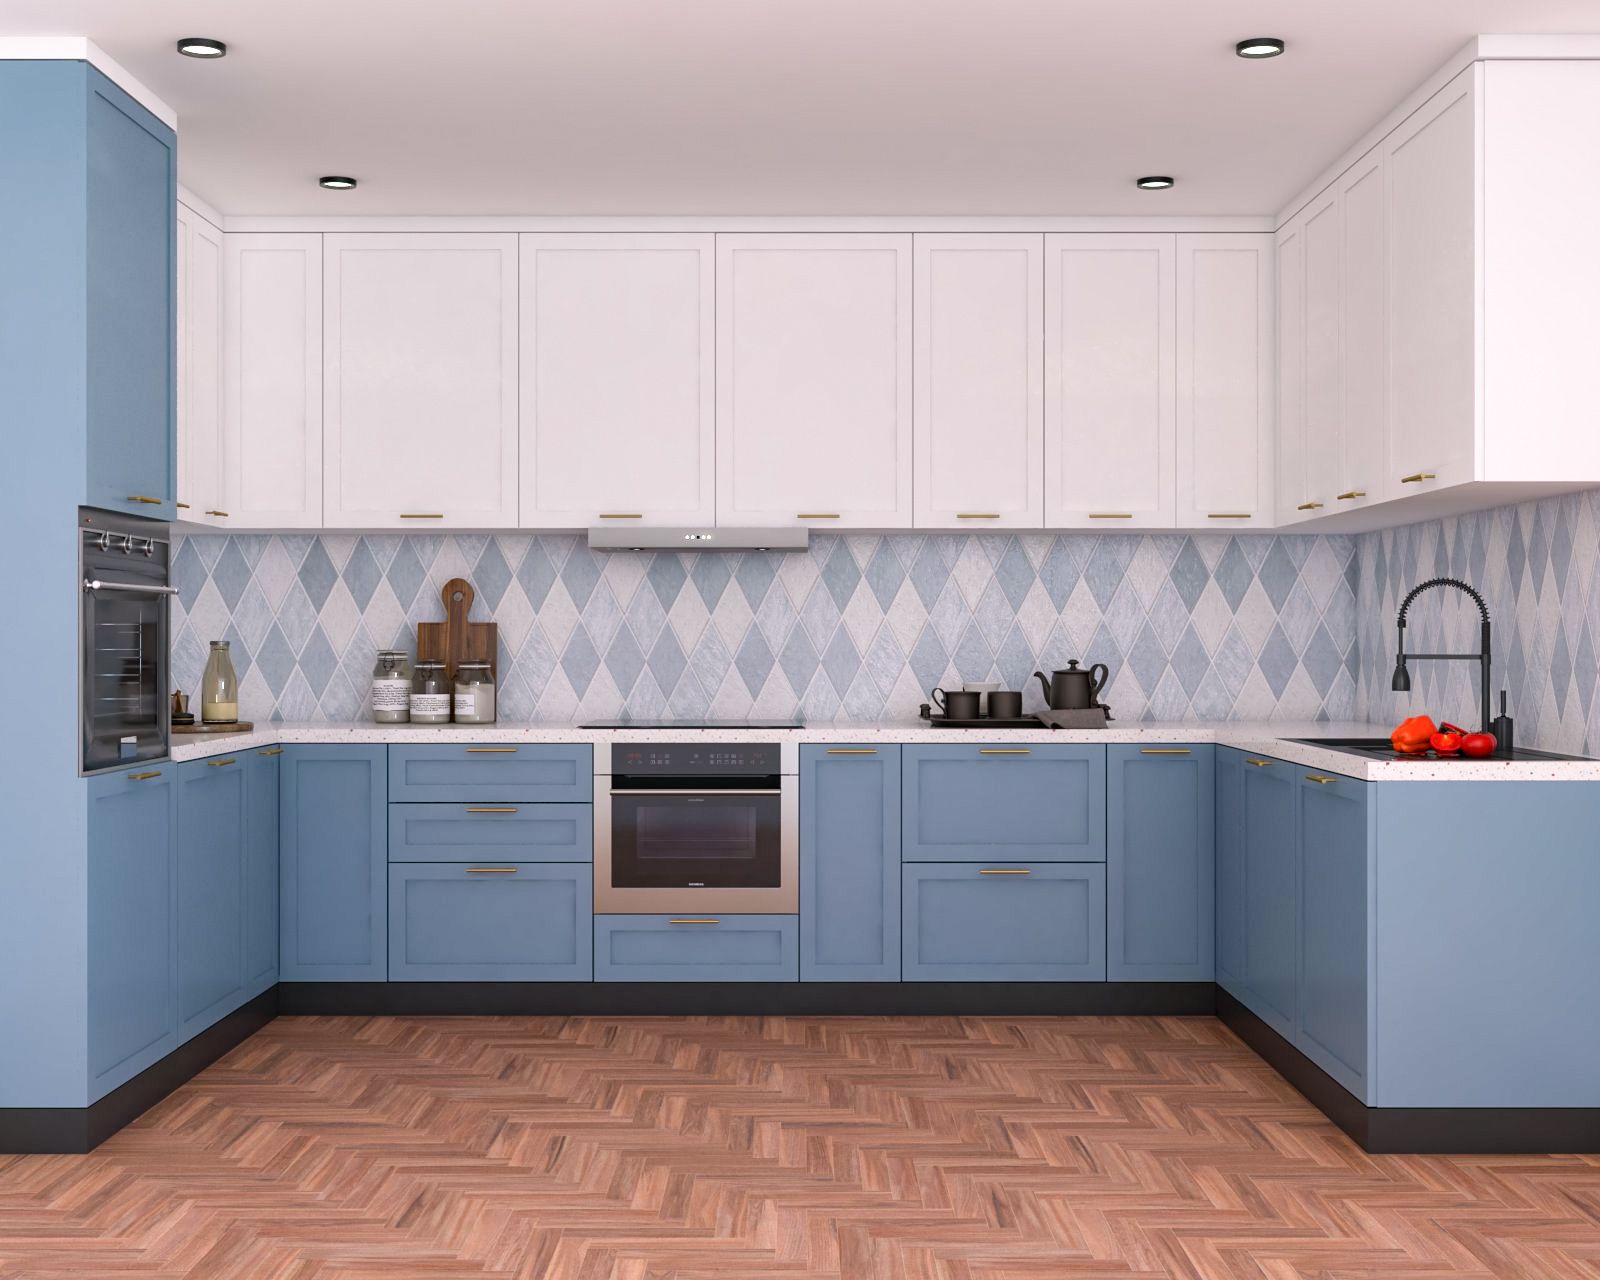 Modern Blue And White U-Shaped Kitchen Design With Diamond-Patterned Kitchen Backsplash